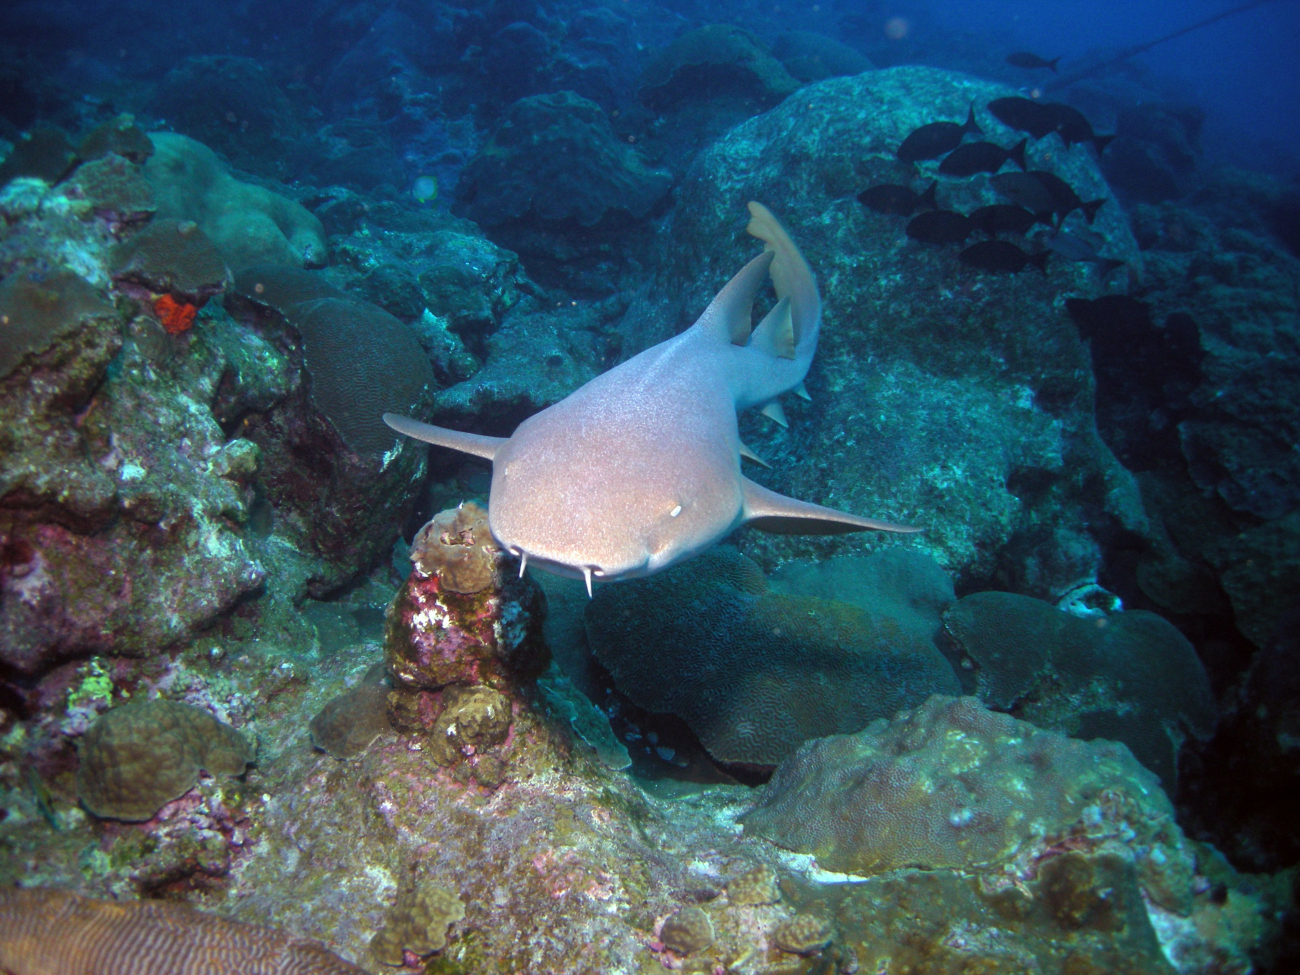 A nurse shark swims above the coral